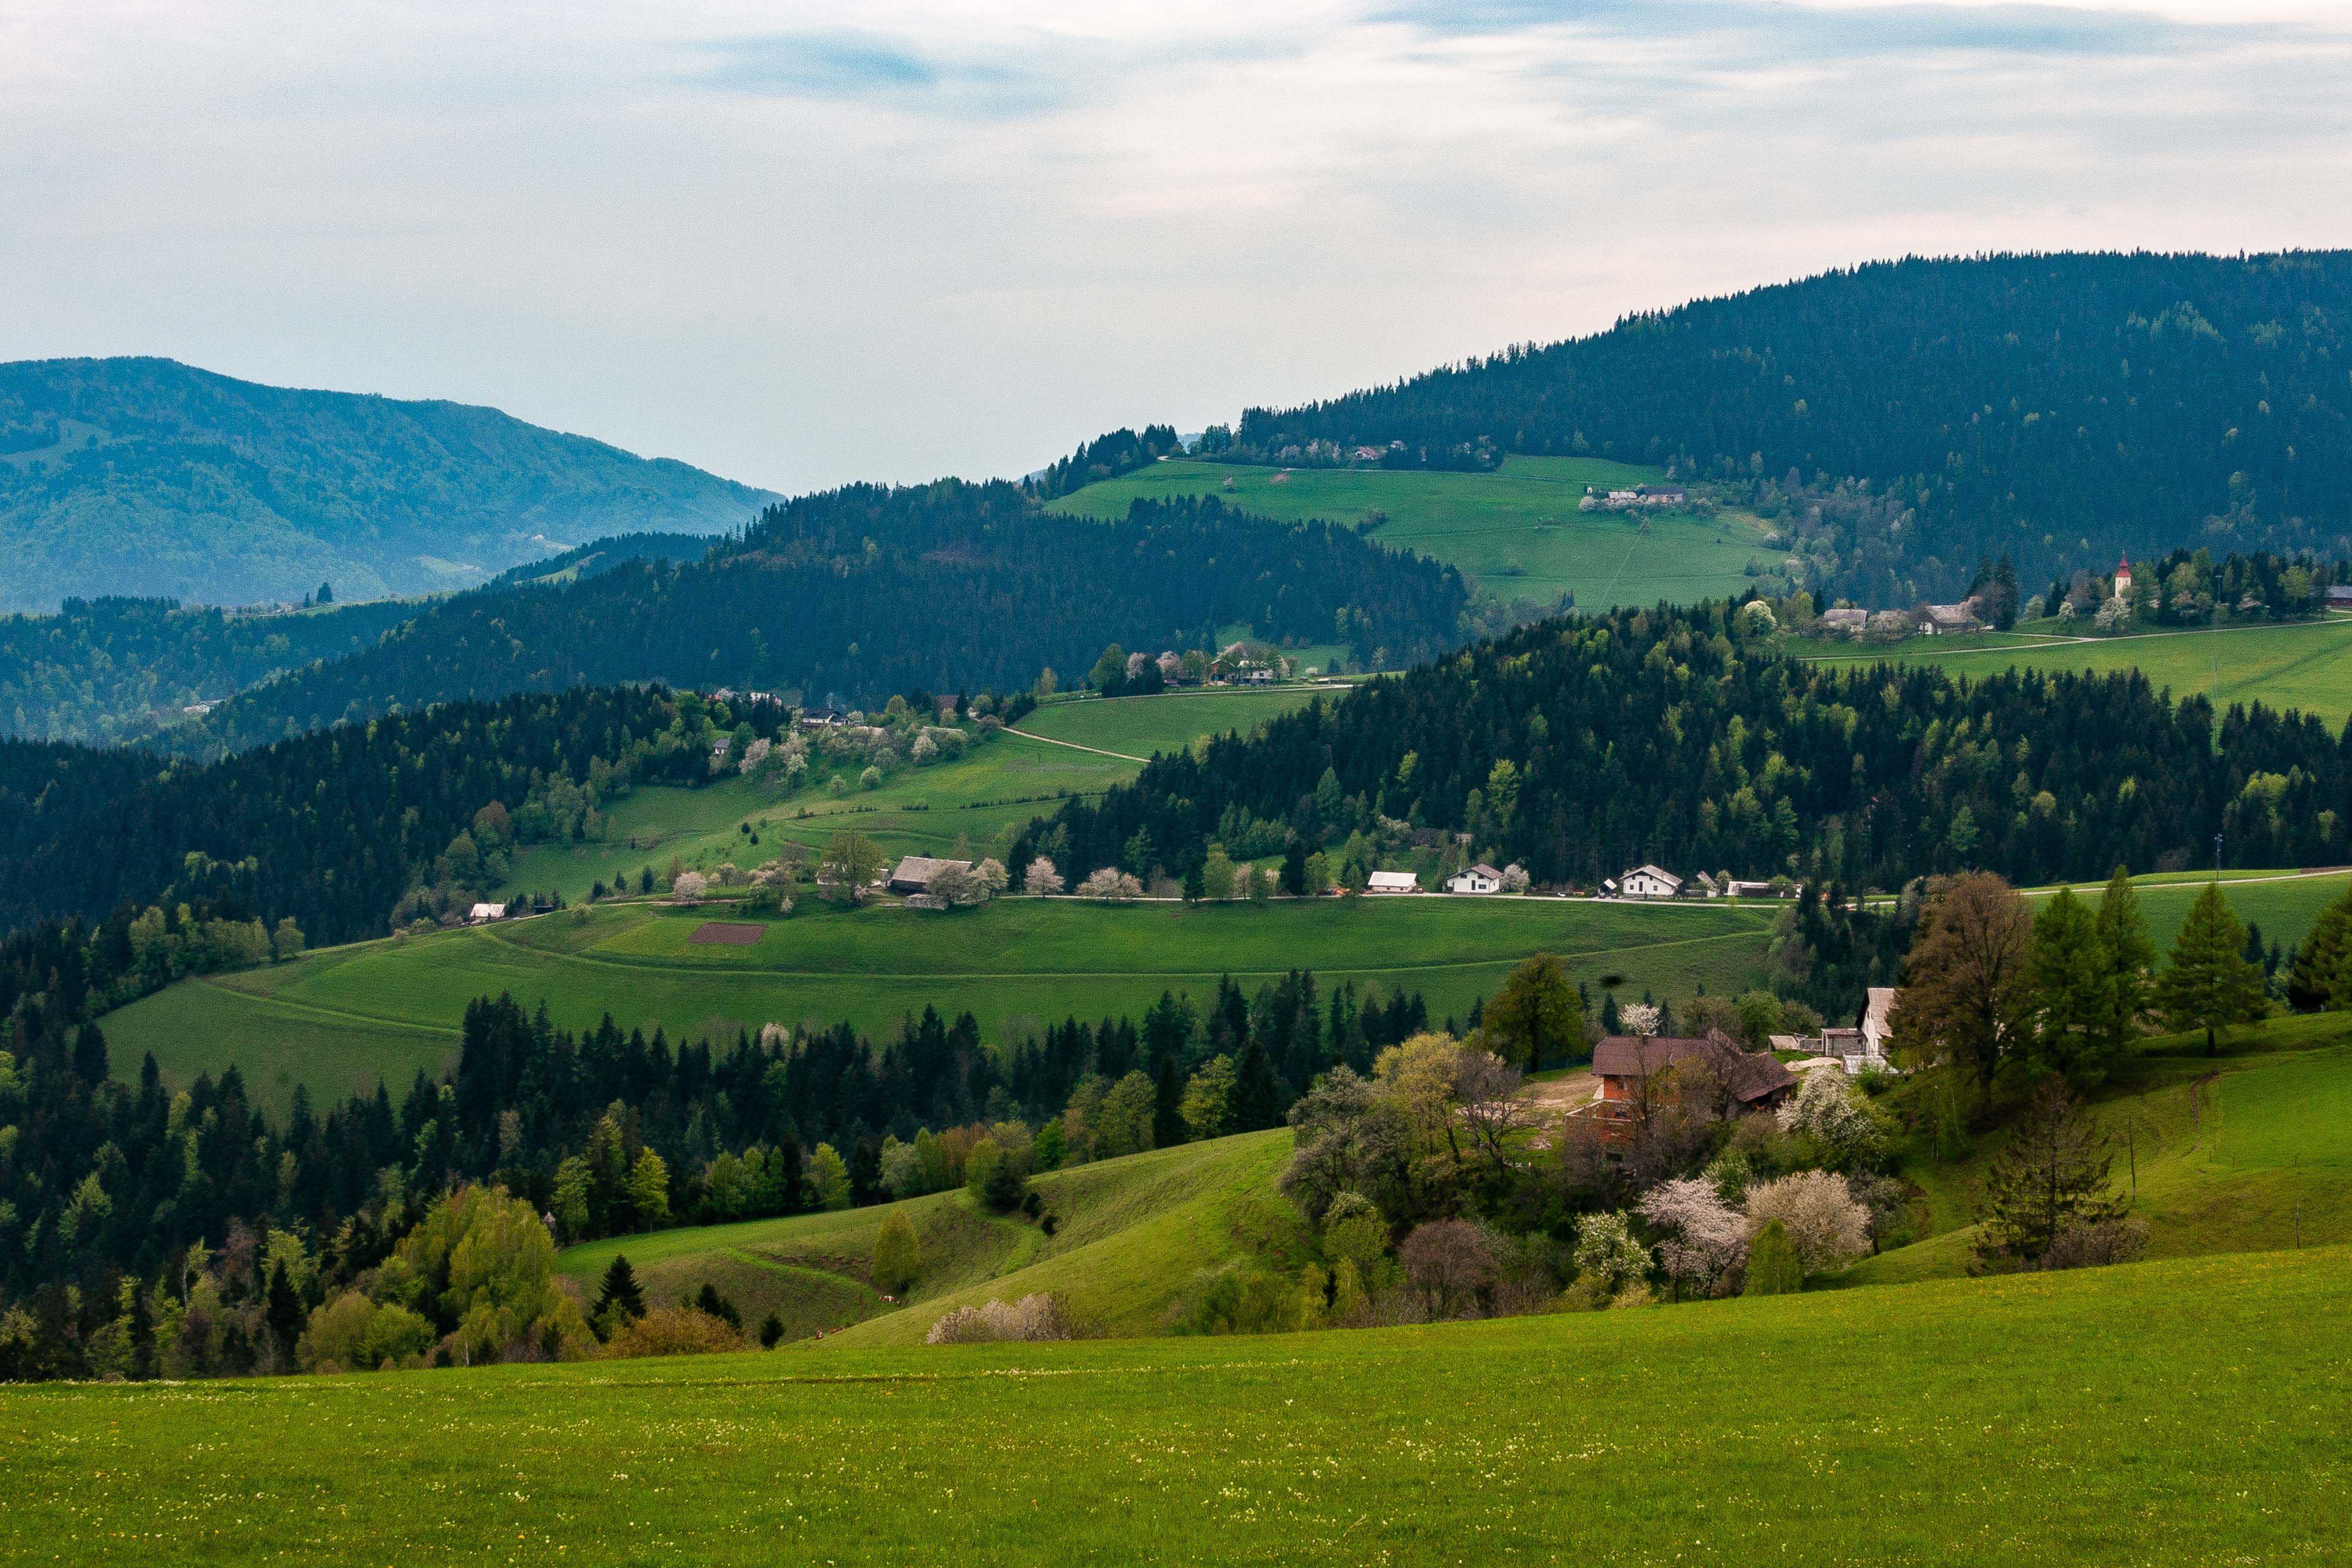 Slovenia, Zrece Prov, Country Landscape, 2006, IMG 5631